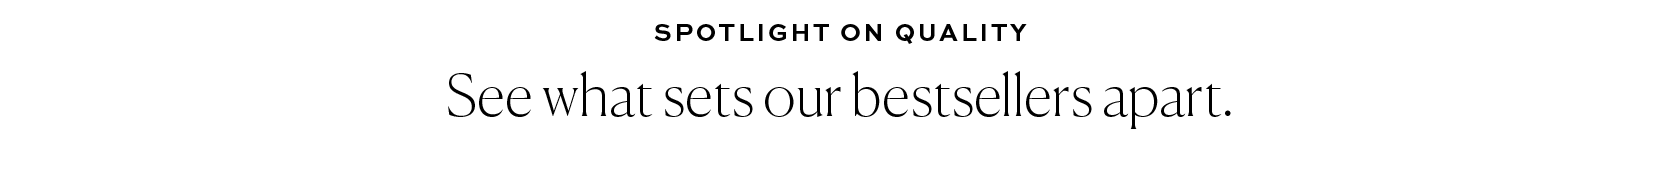 Spotlight on Quality